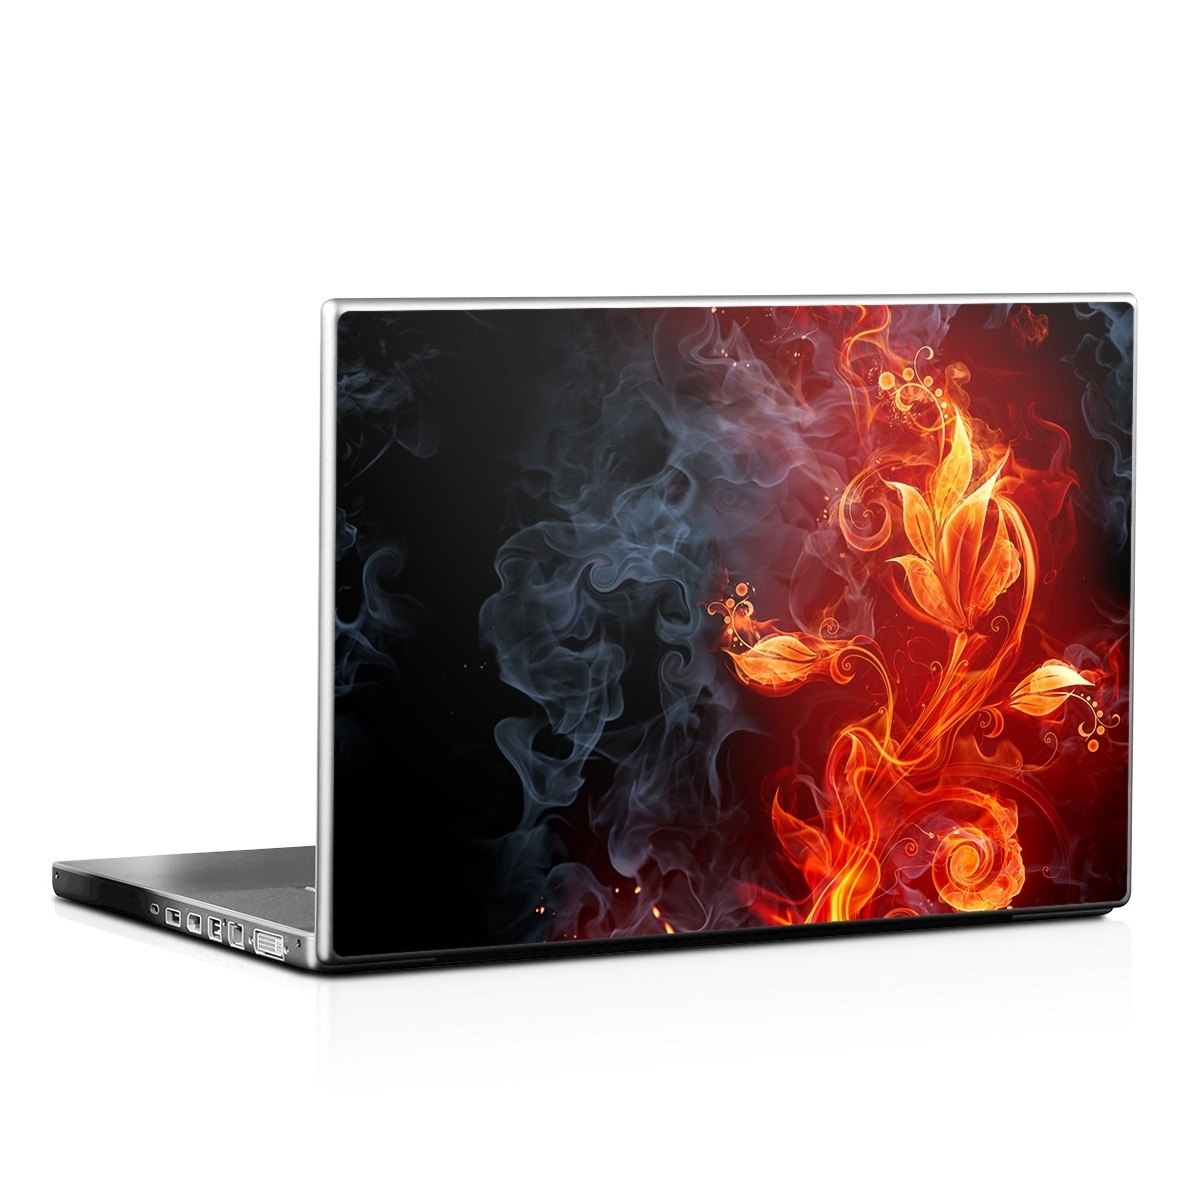 Laptop Skin - Flower Of Fire (Image 1)